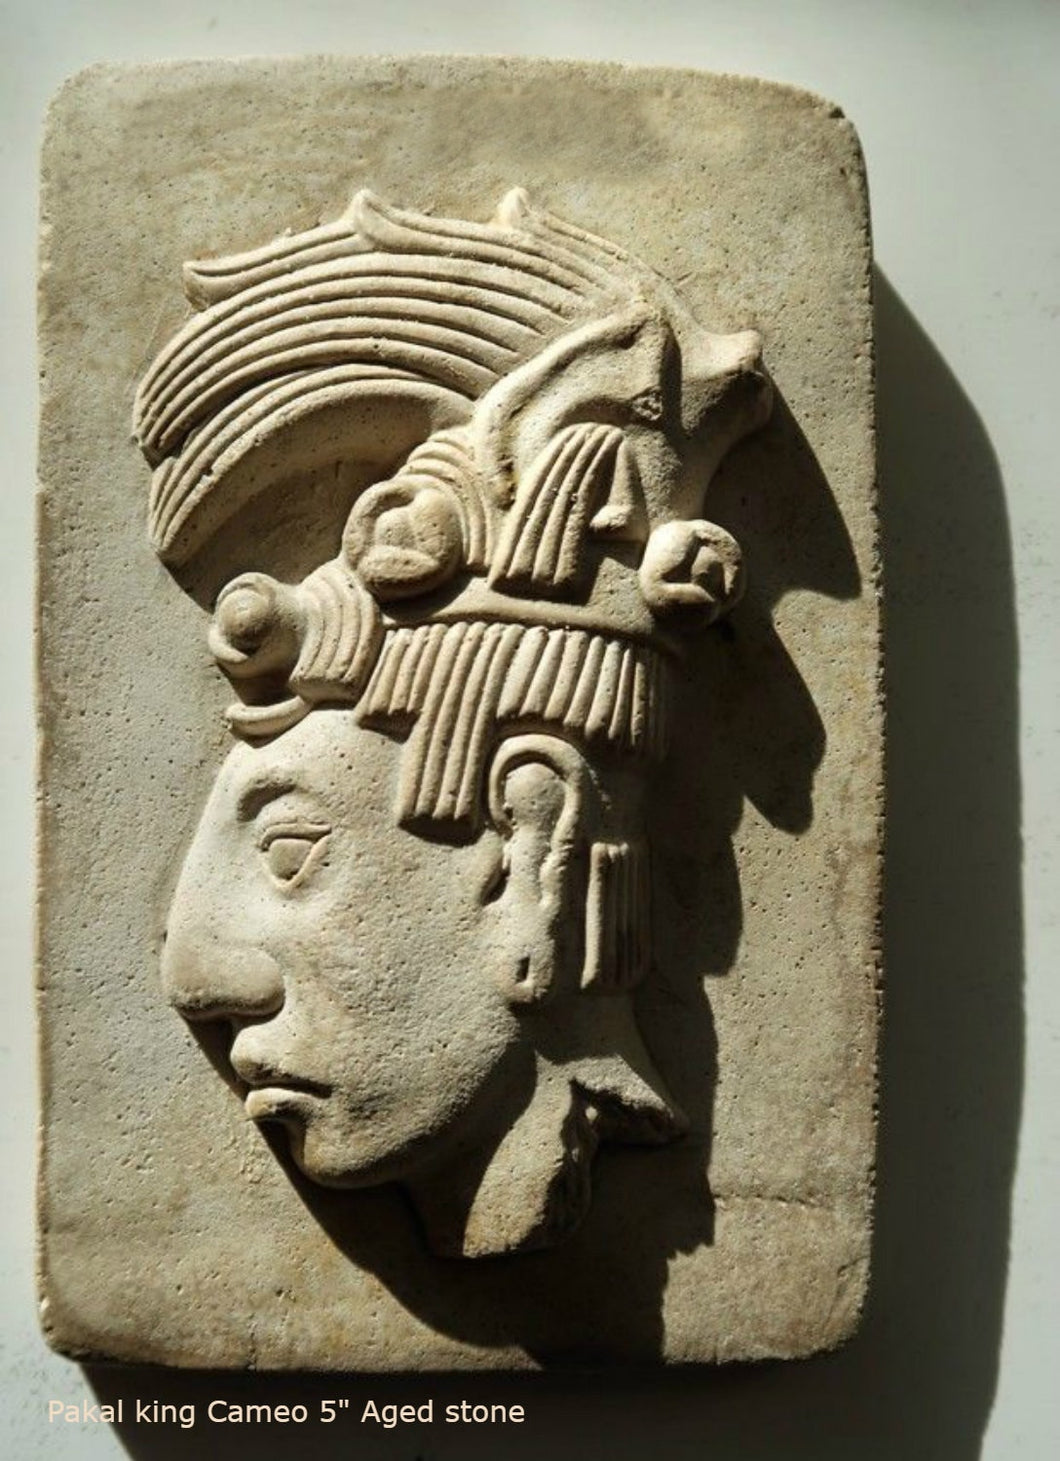 History Aztec Mayan king K’inich Janaab’ Pakal Cameo wall plaque art 5